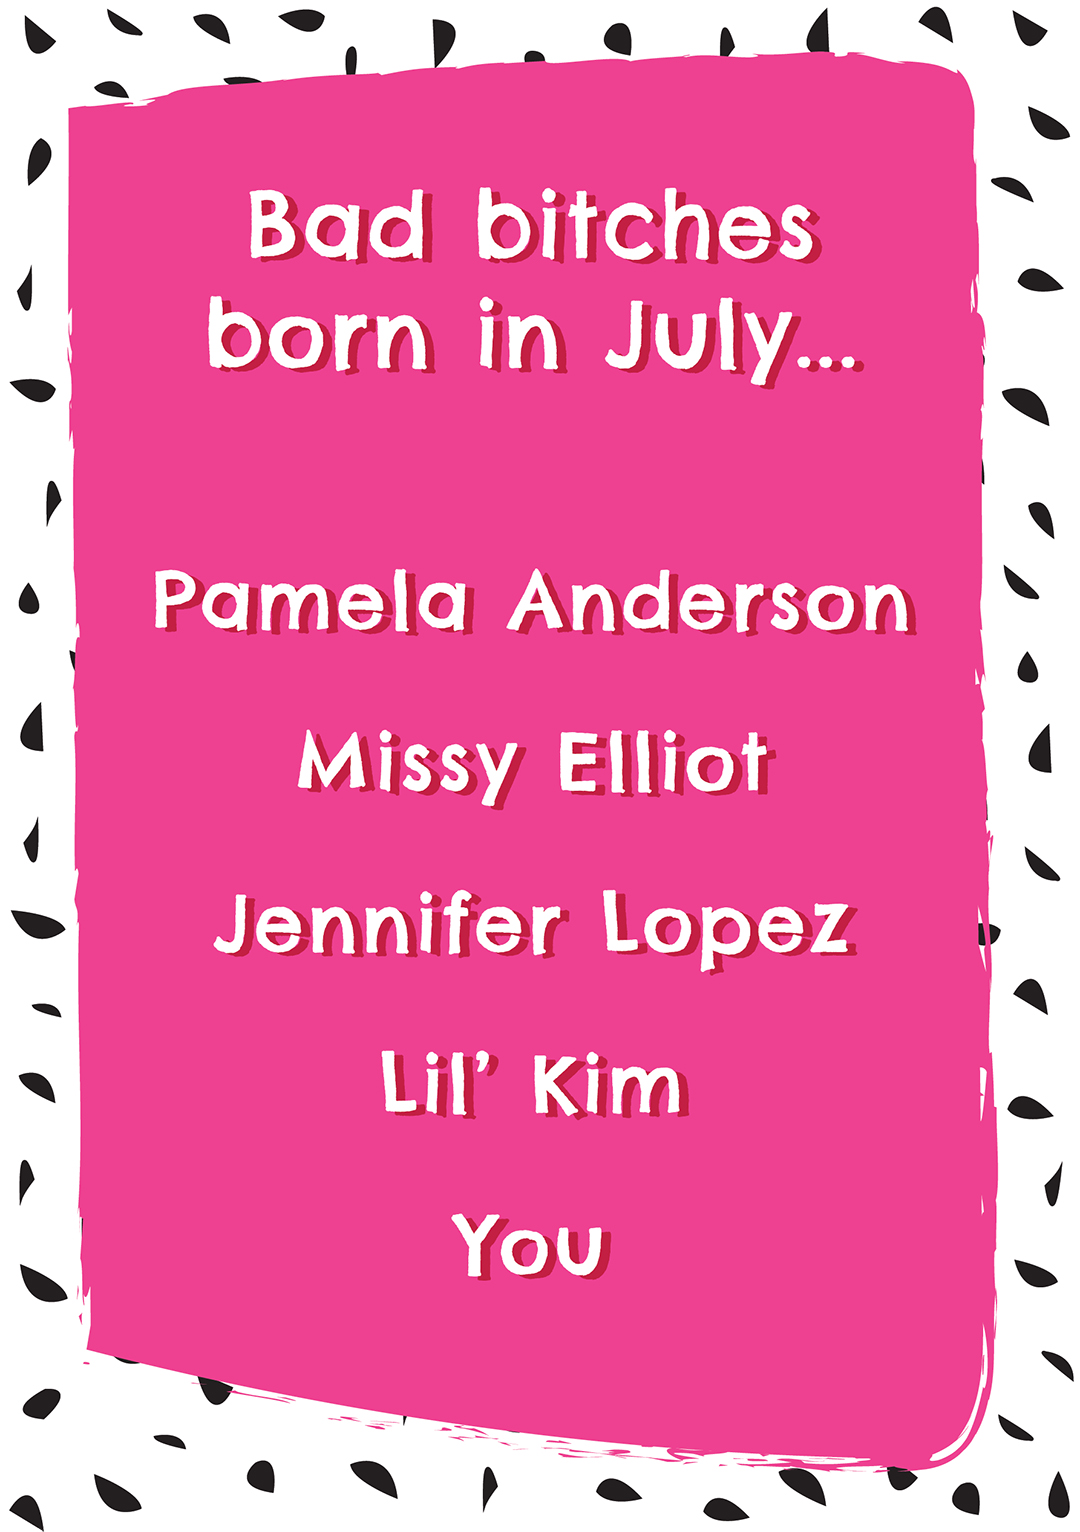 Bad B**ches Born In July - Birthday Card